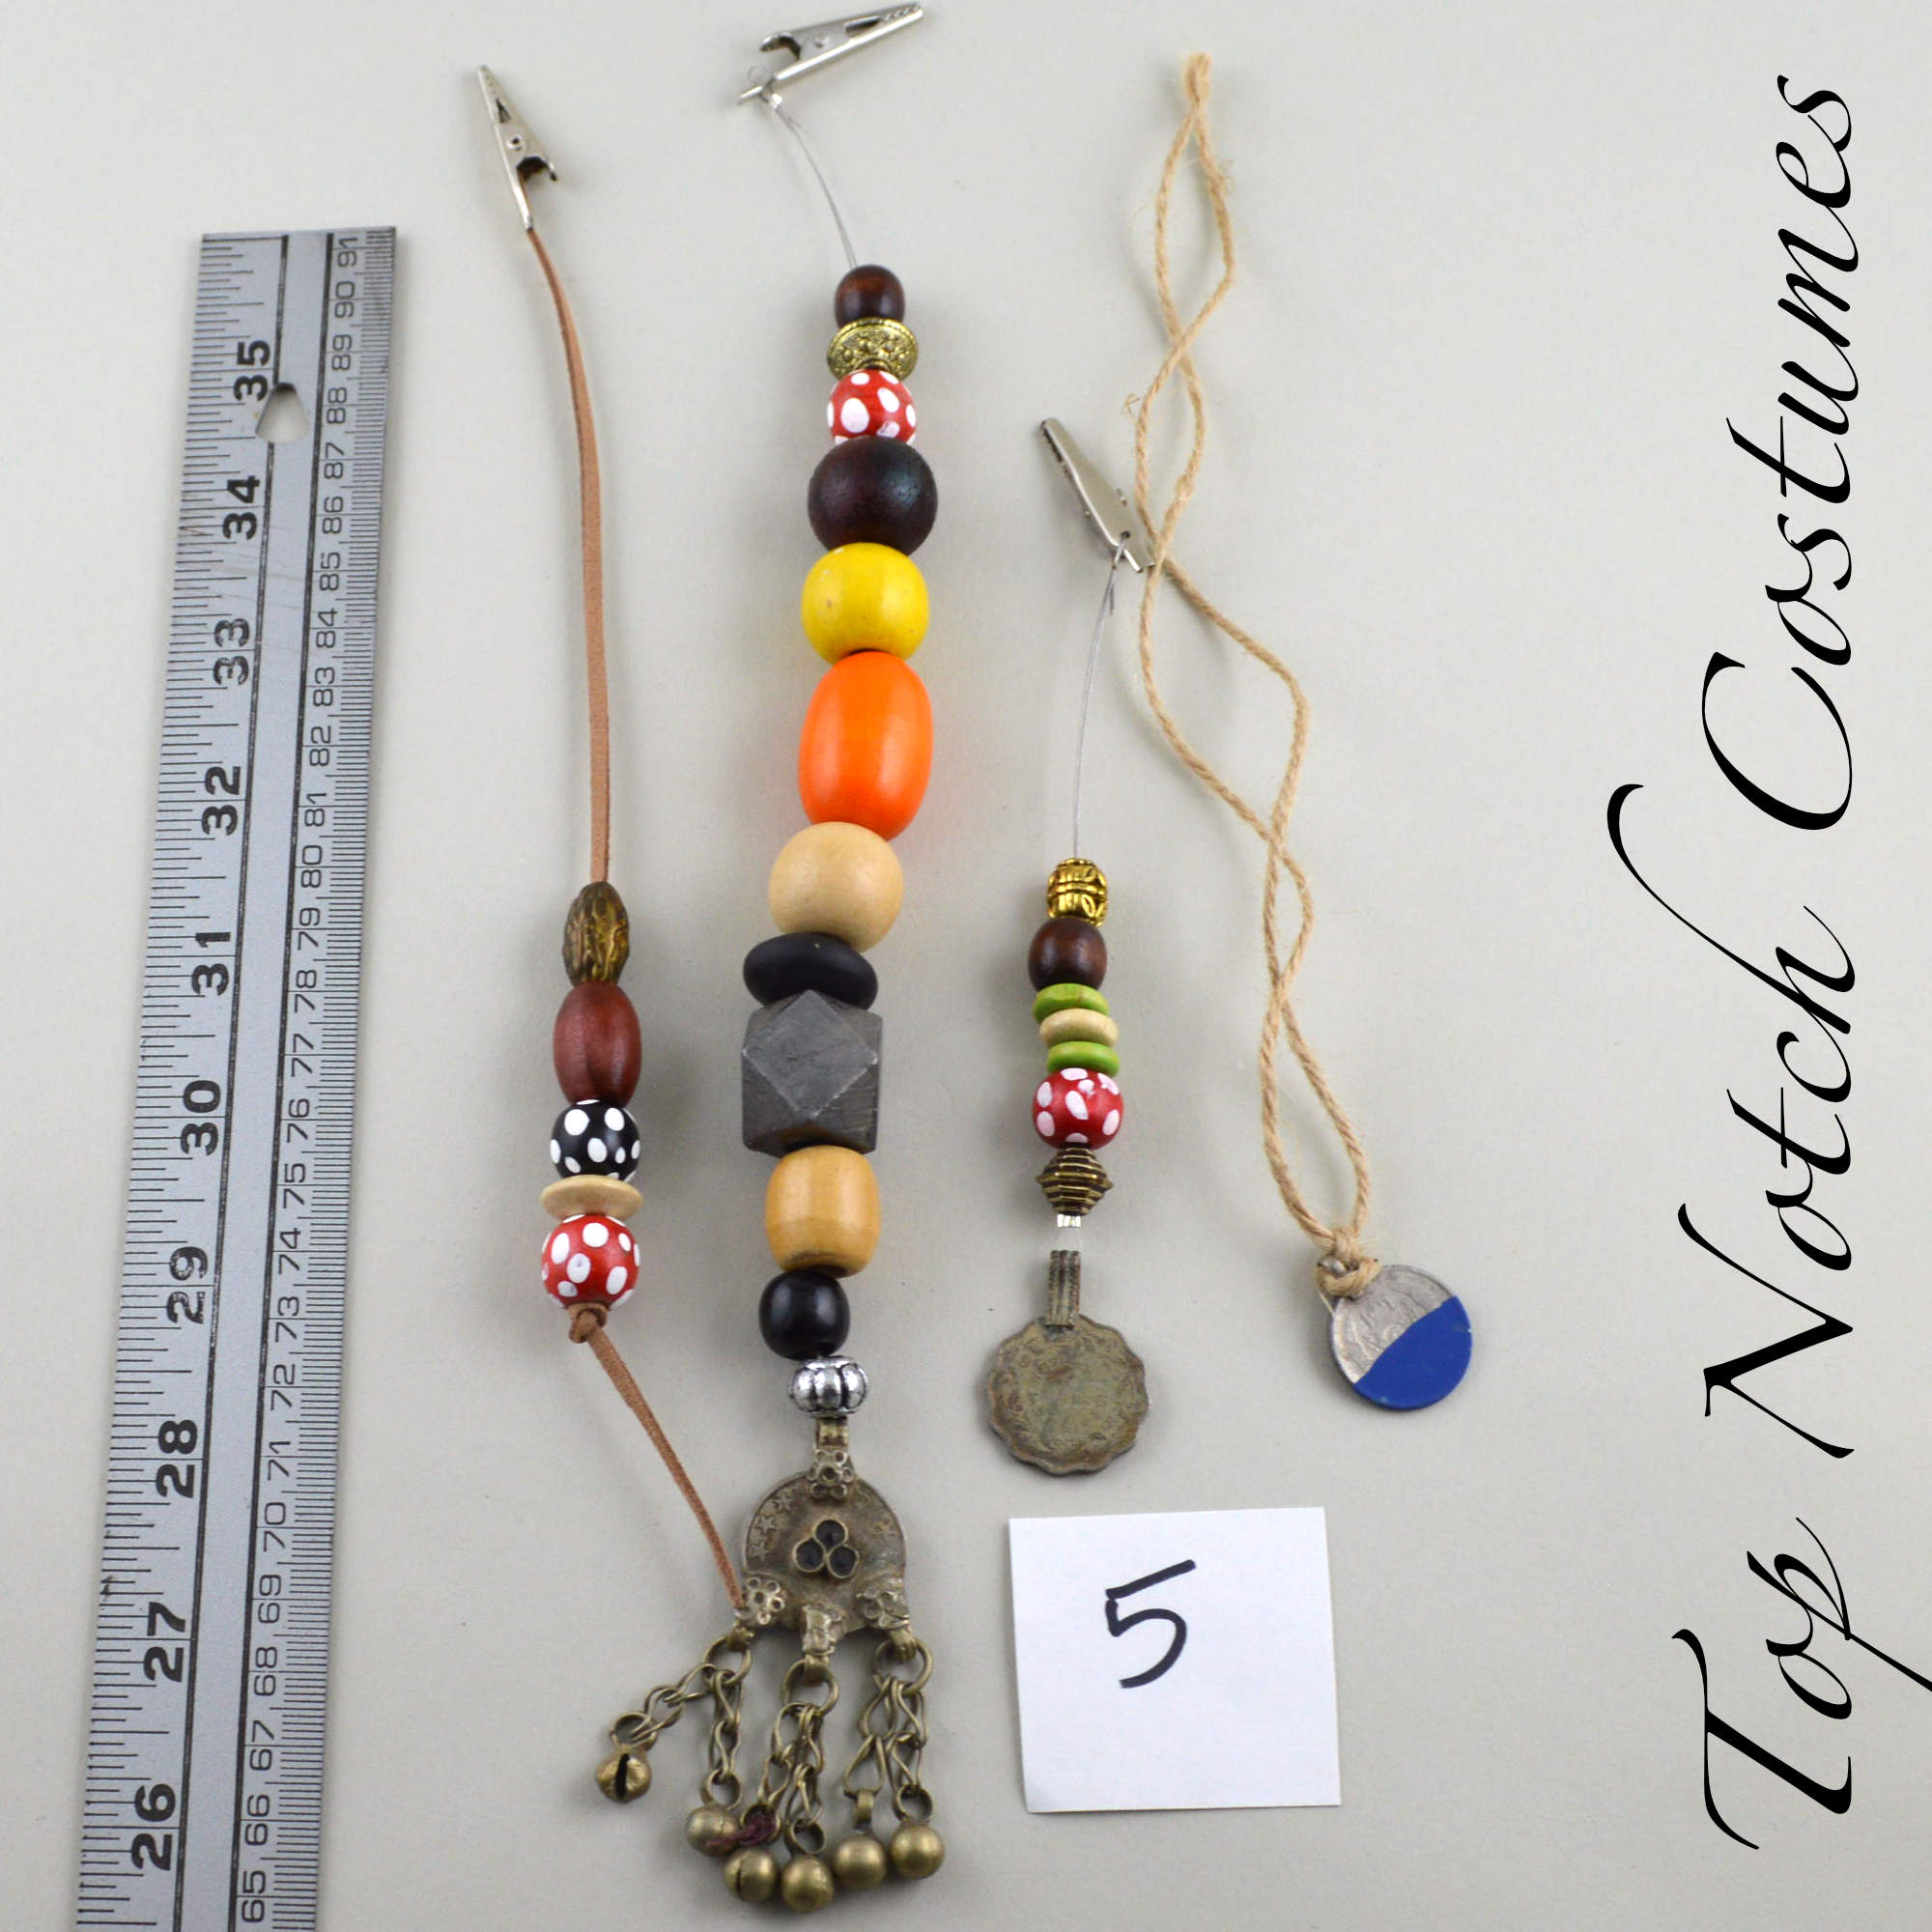 Jack Sparrow Replica Pirate Costume Jewelry Beads Set No. 5